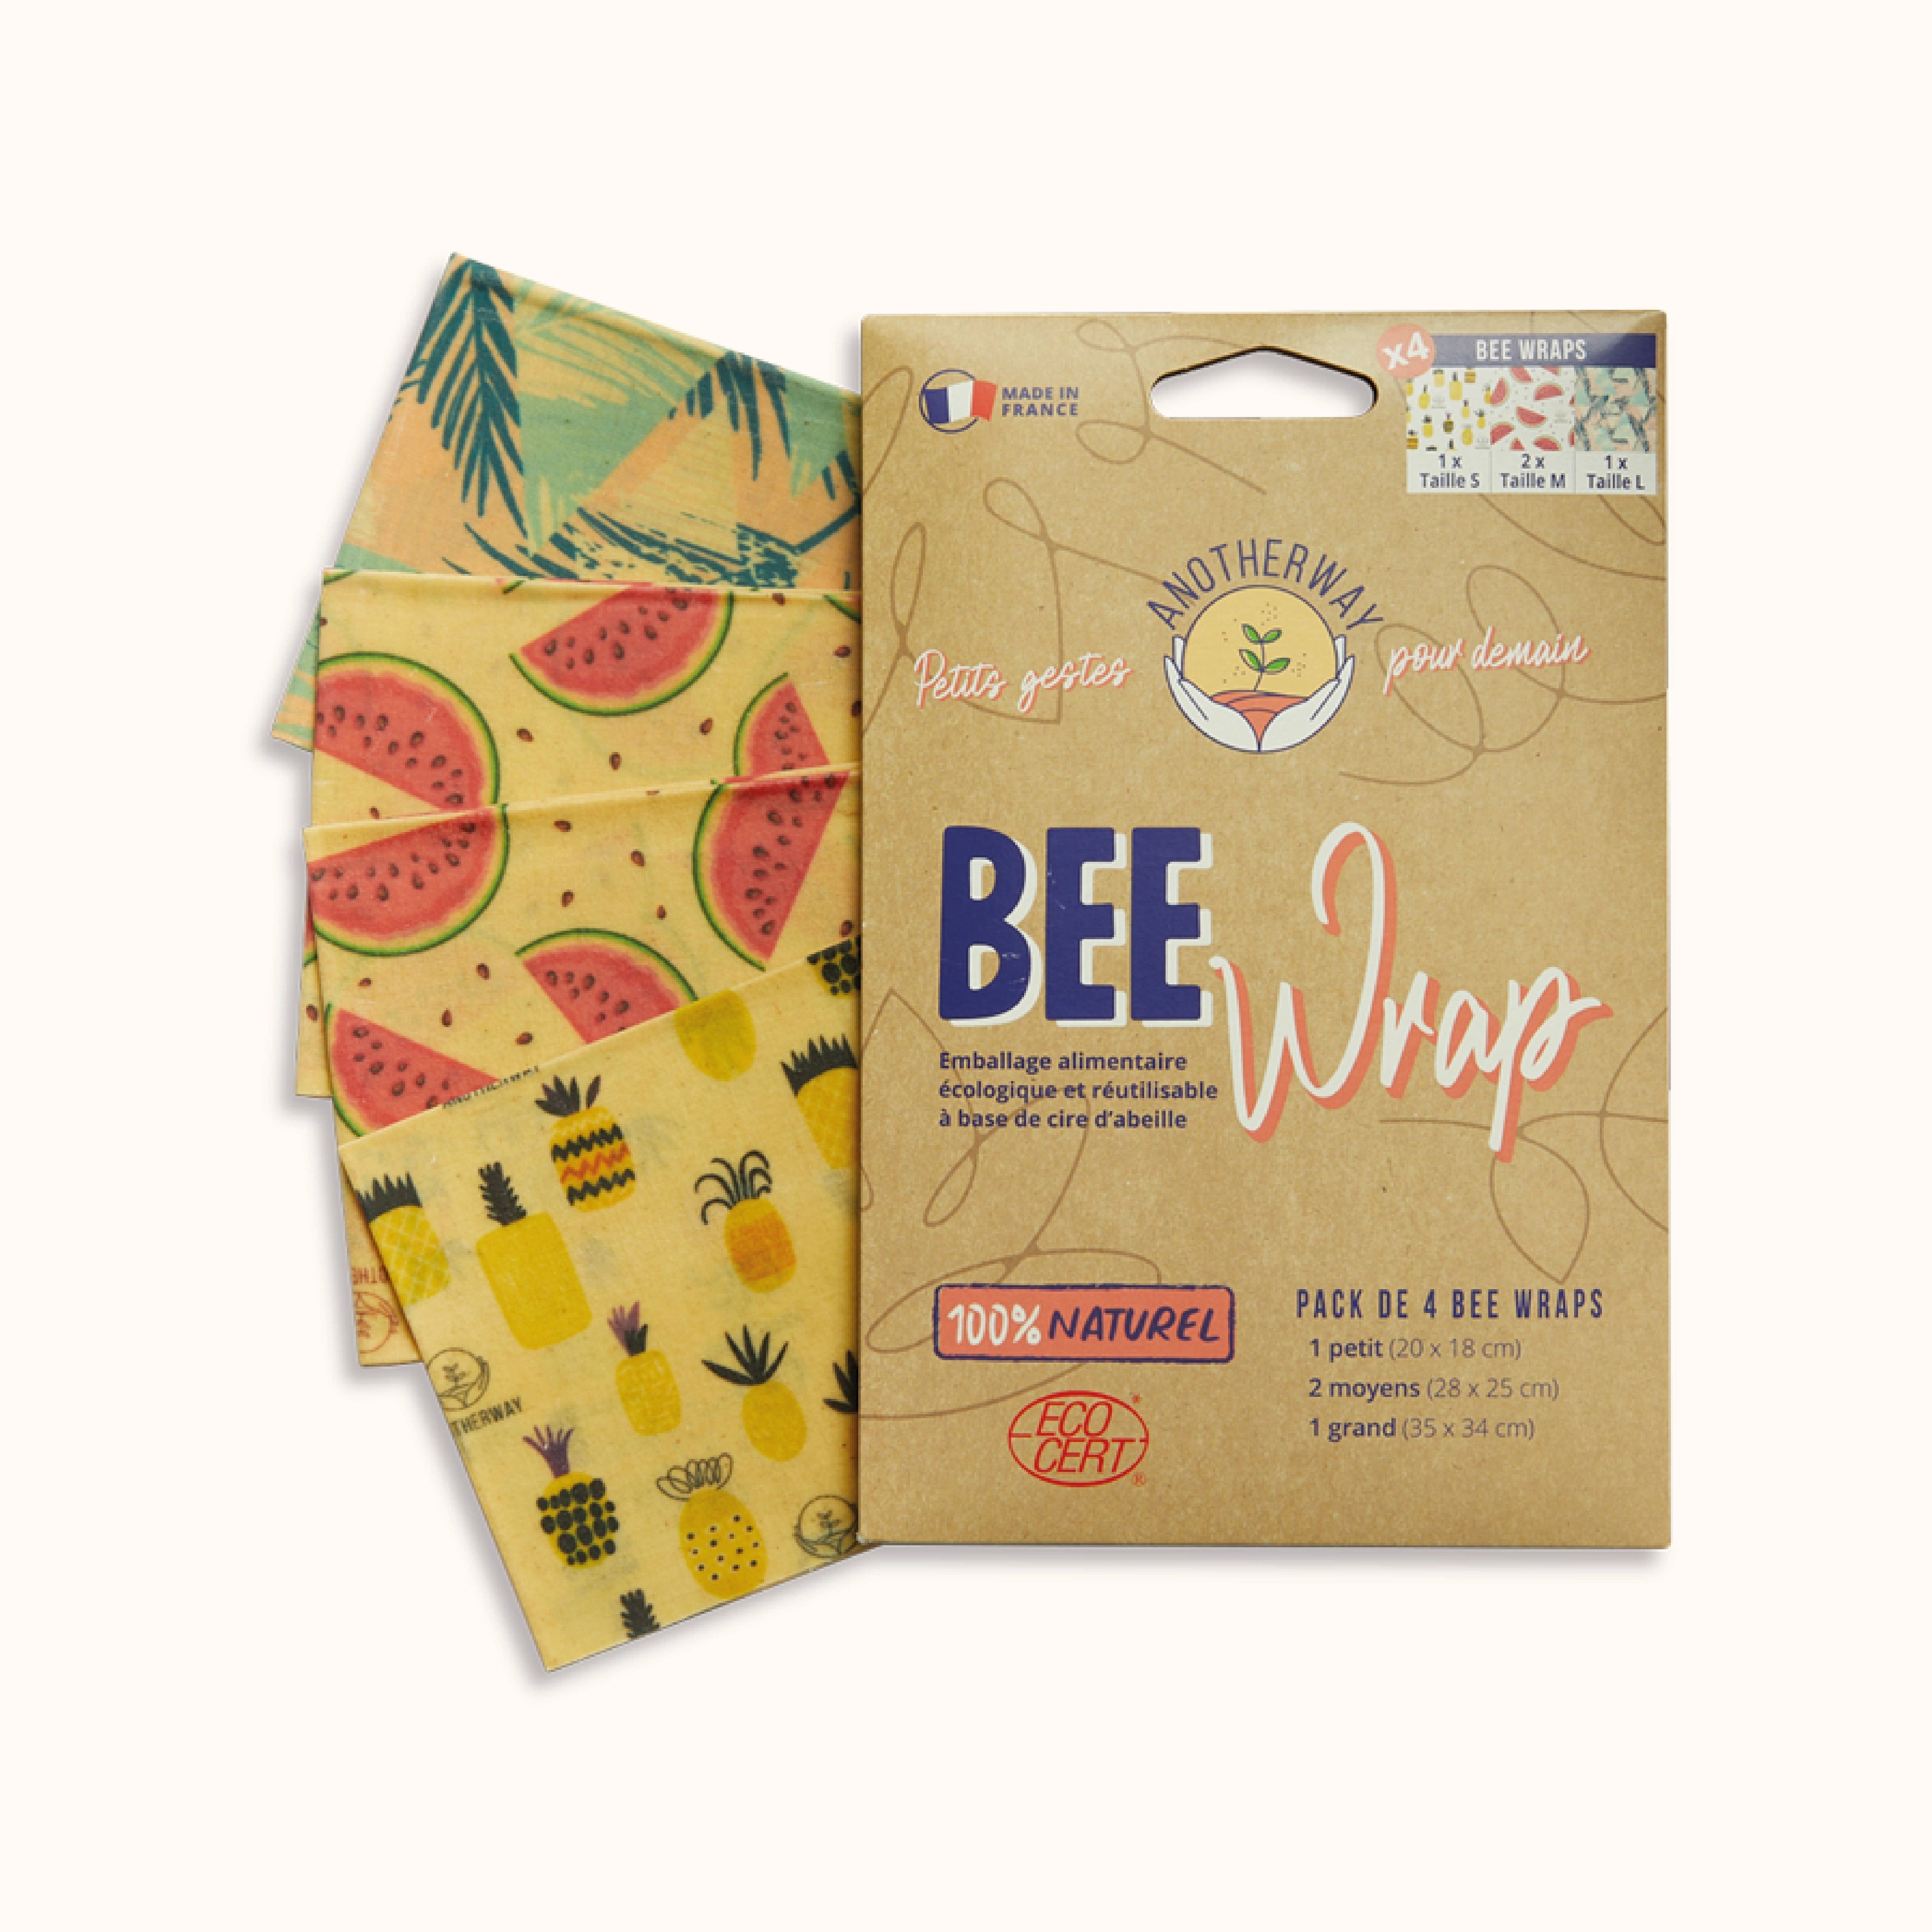 Bee Wrap x4 - original